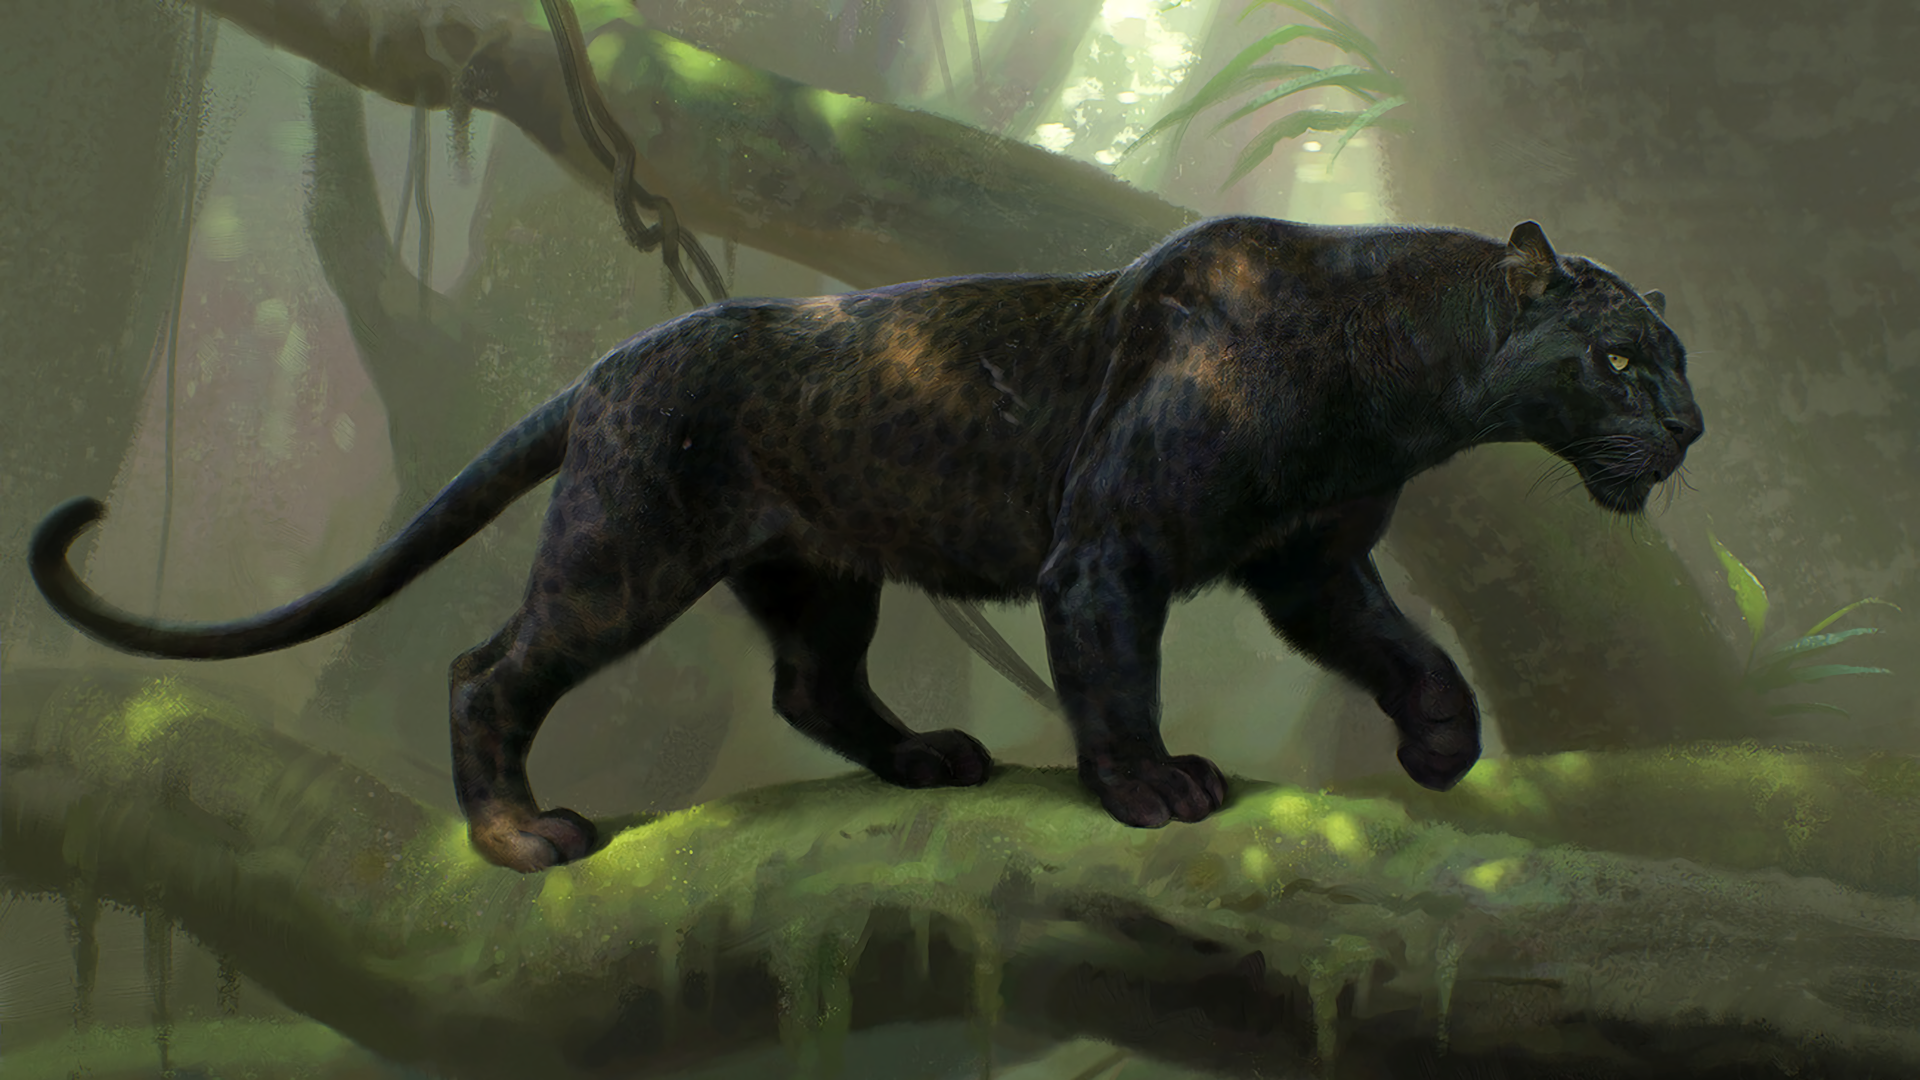 General 1920x1080 Black Panther animals big cats mammals artwork